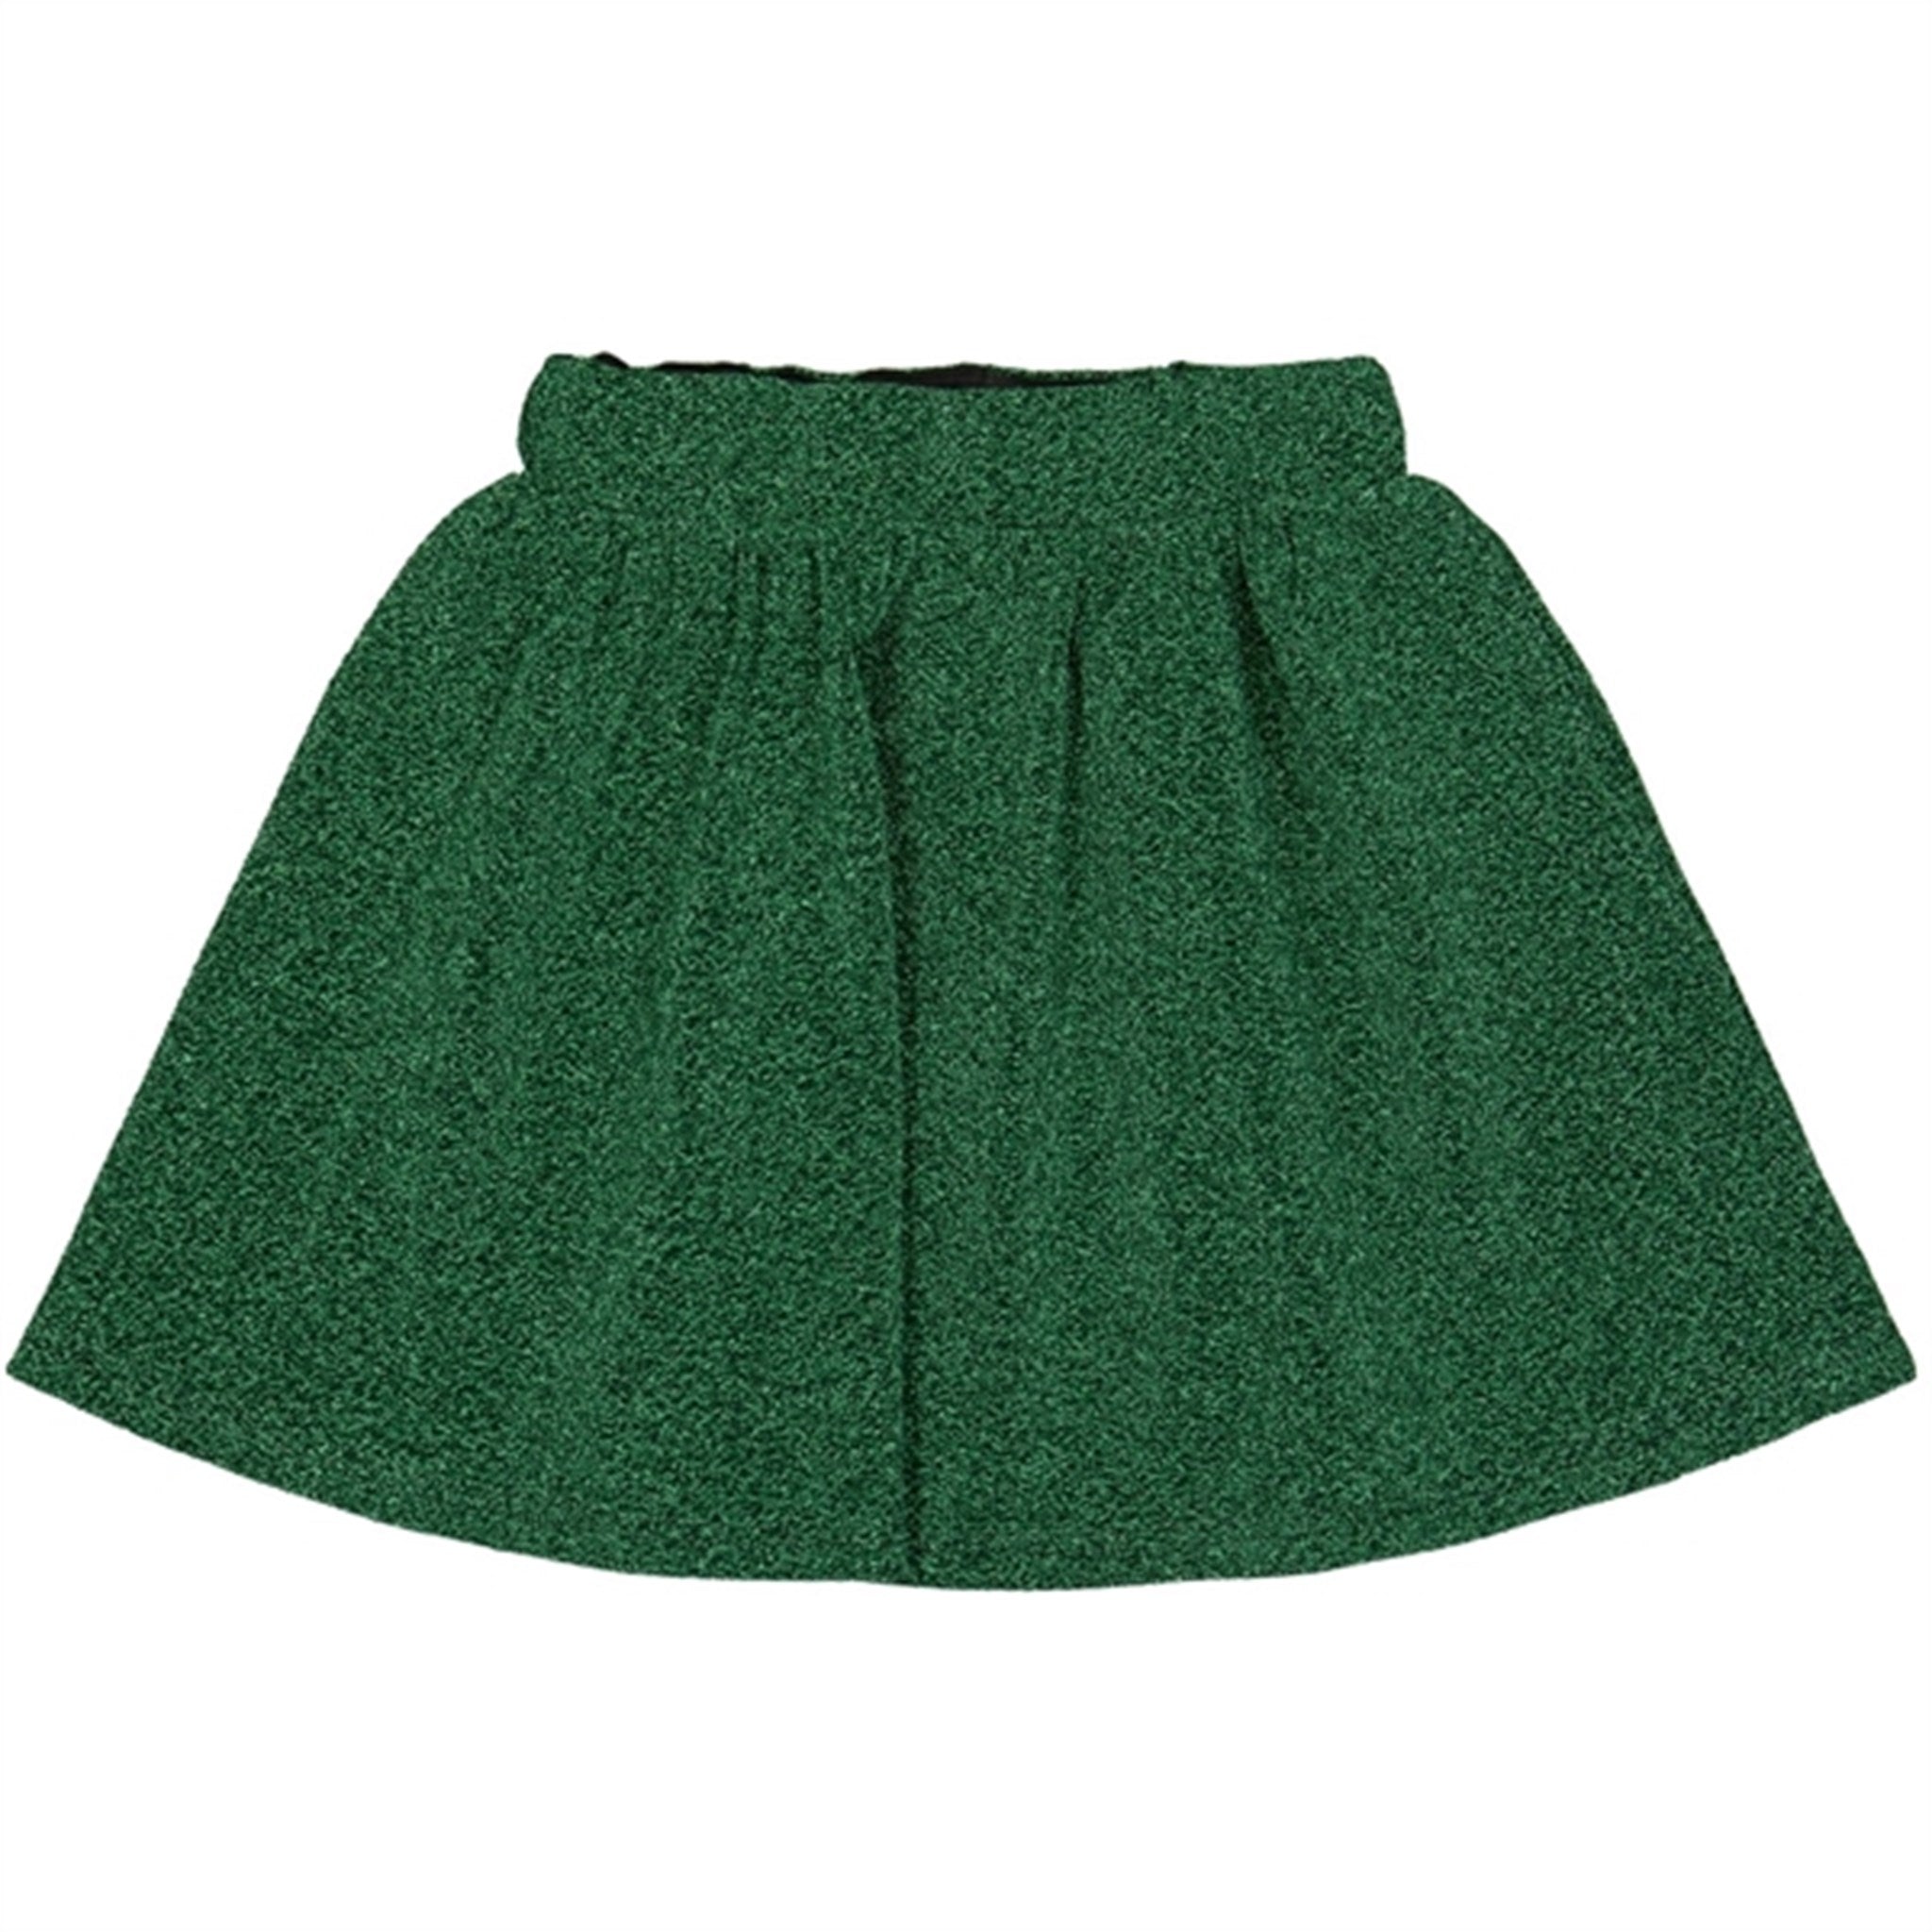 The NEW Bright Green Jidalou Skirt